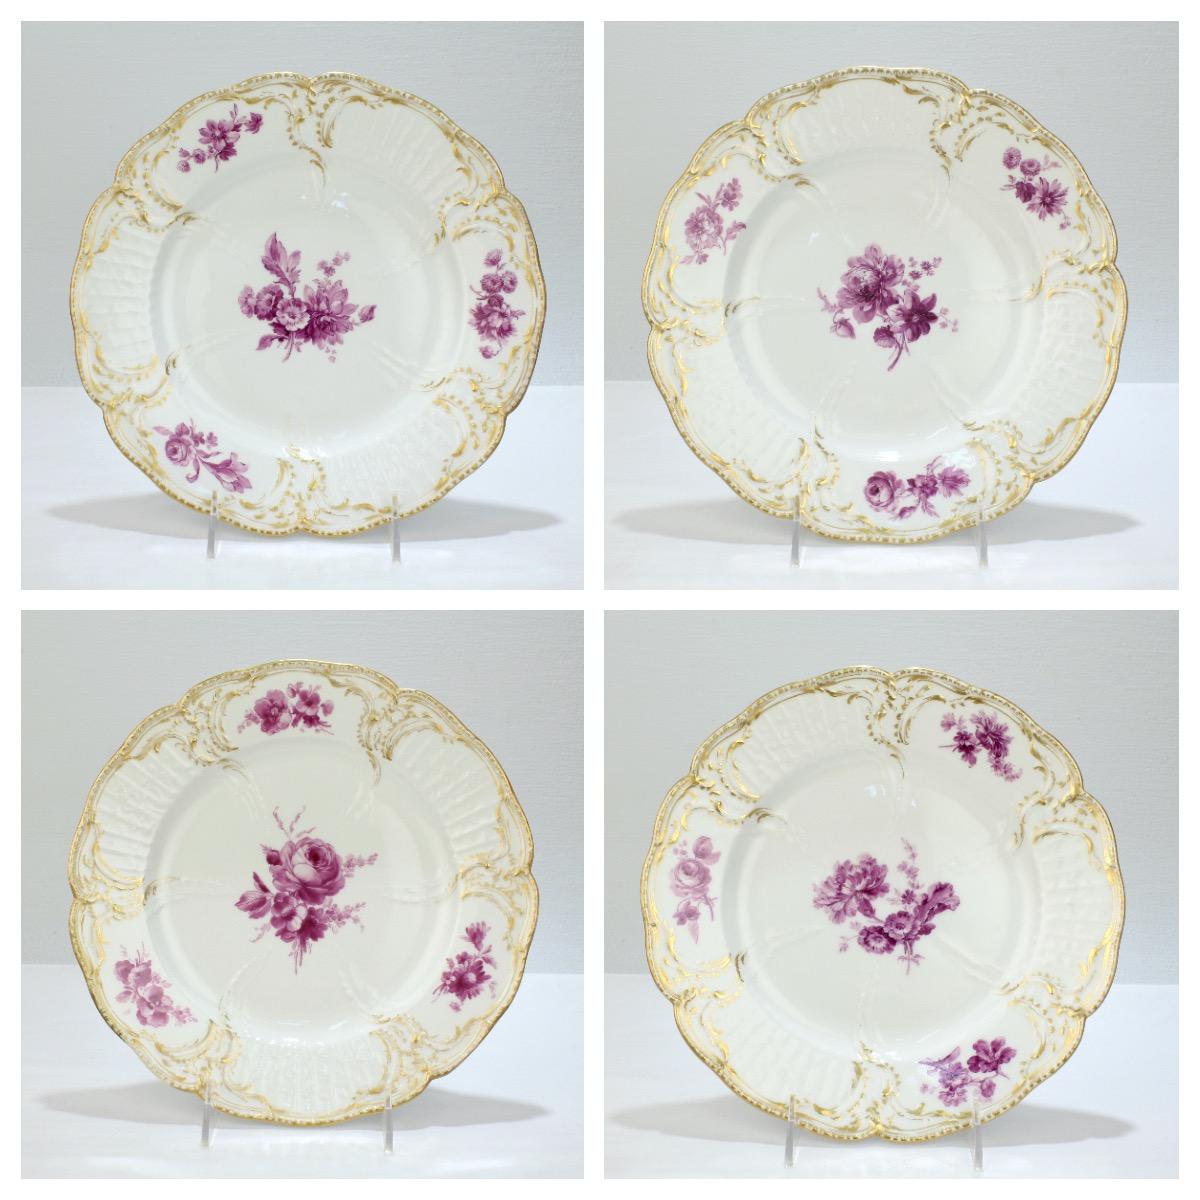 20th Century Set of 12 Antique KPM Royal Berlin Porcelain Reliefzierat Dinner Plates in Puce